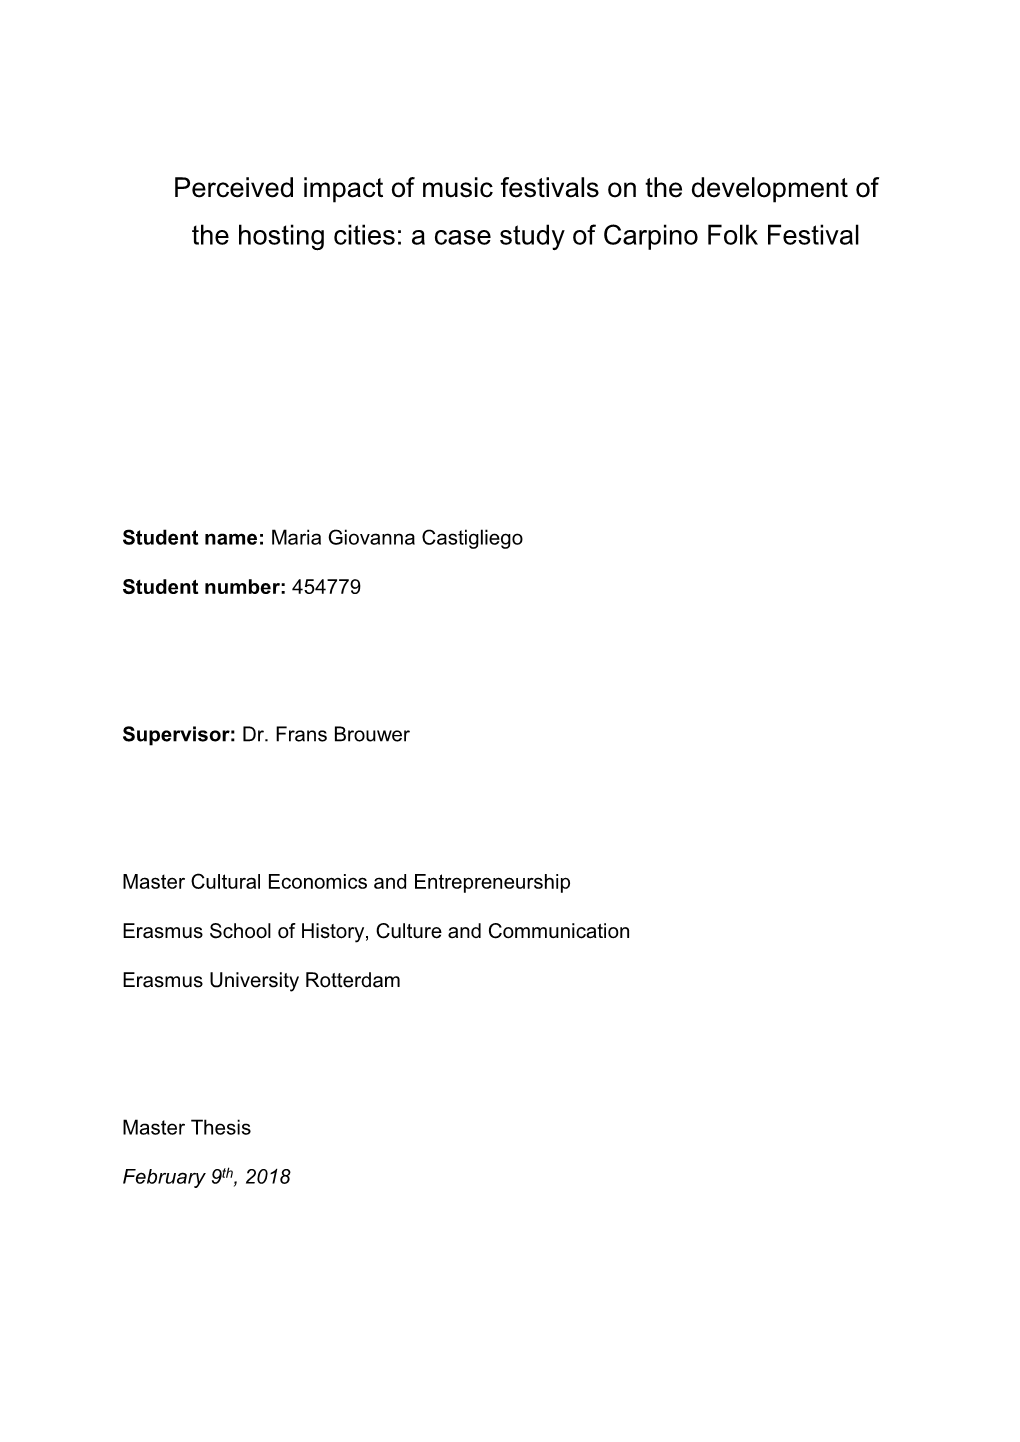 A Case Study of Carpino Folk Festival